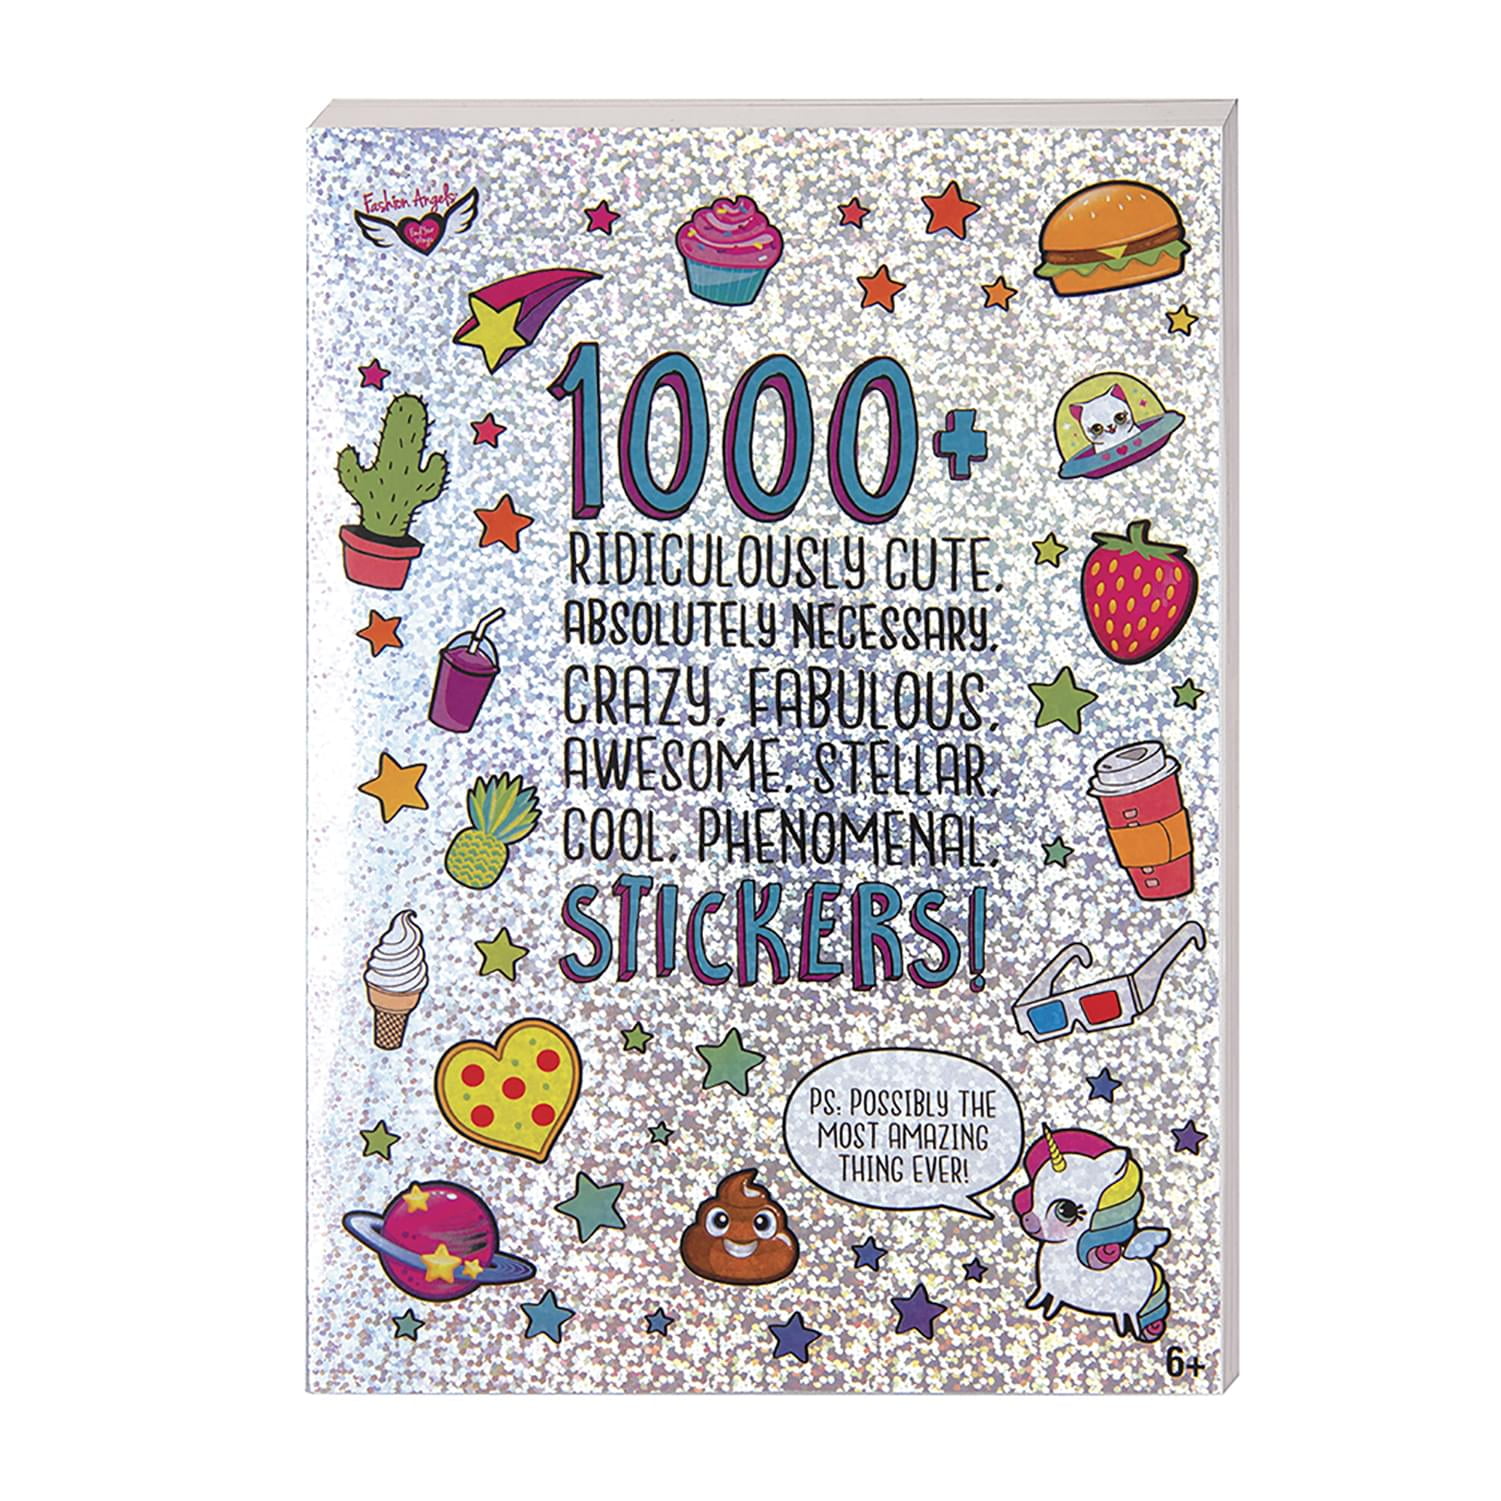 Sticker Doodles Sticker Album or Reusable Sticker Book – The Sticker Party